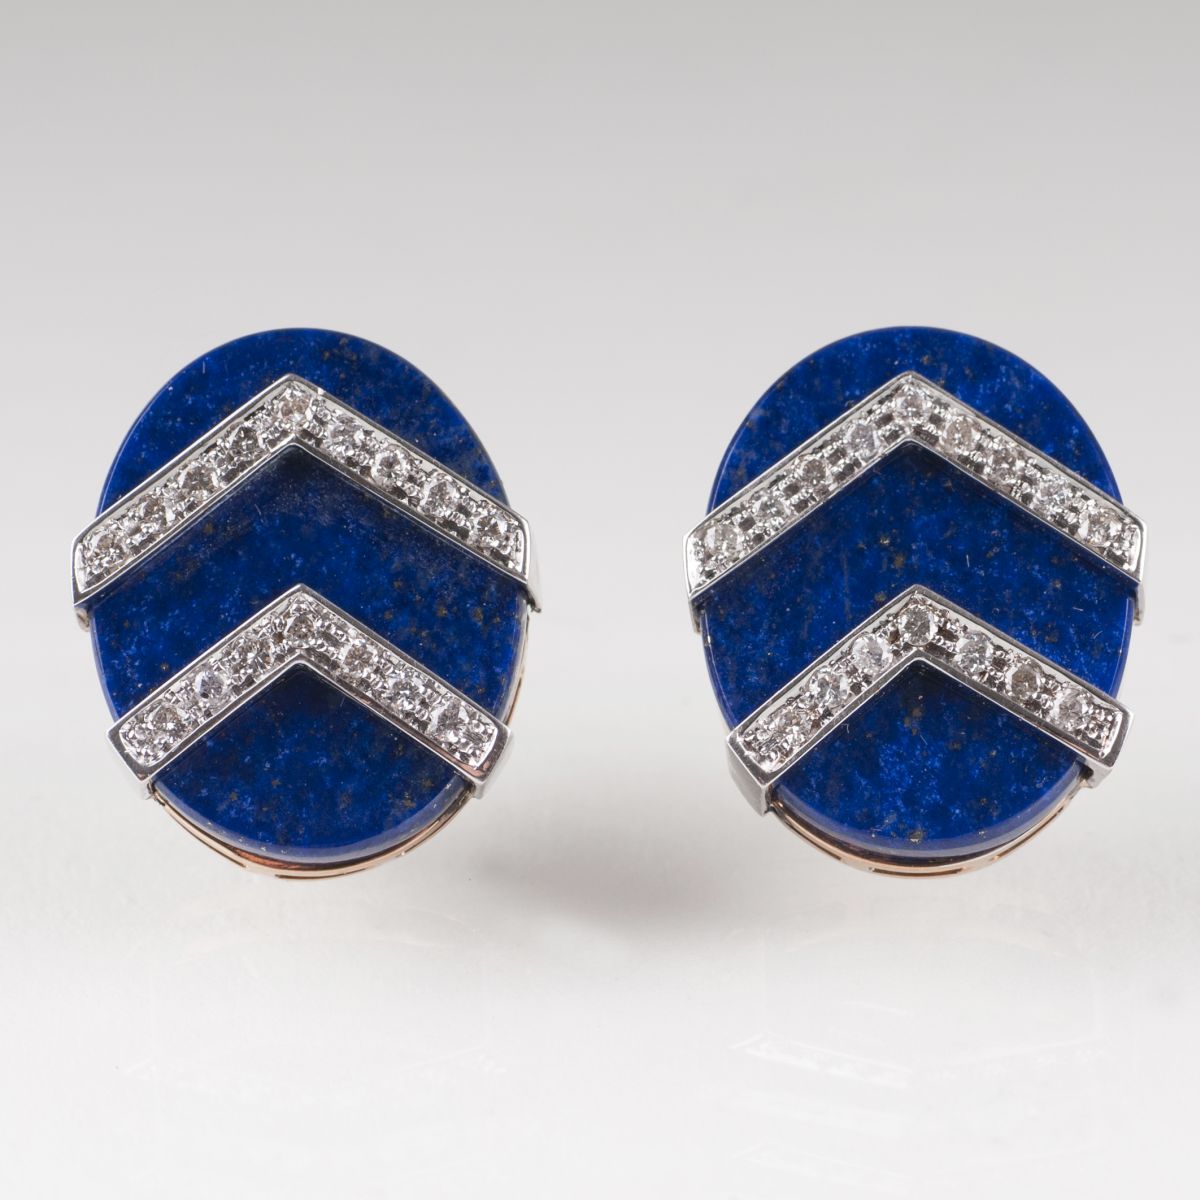 A pair of lapis lazuli diamond earrings